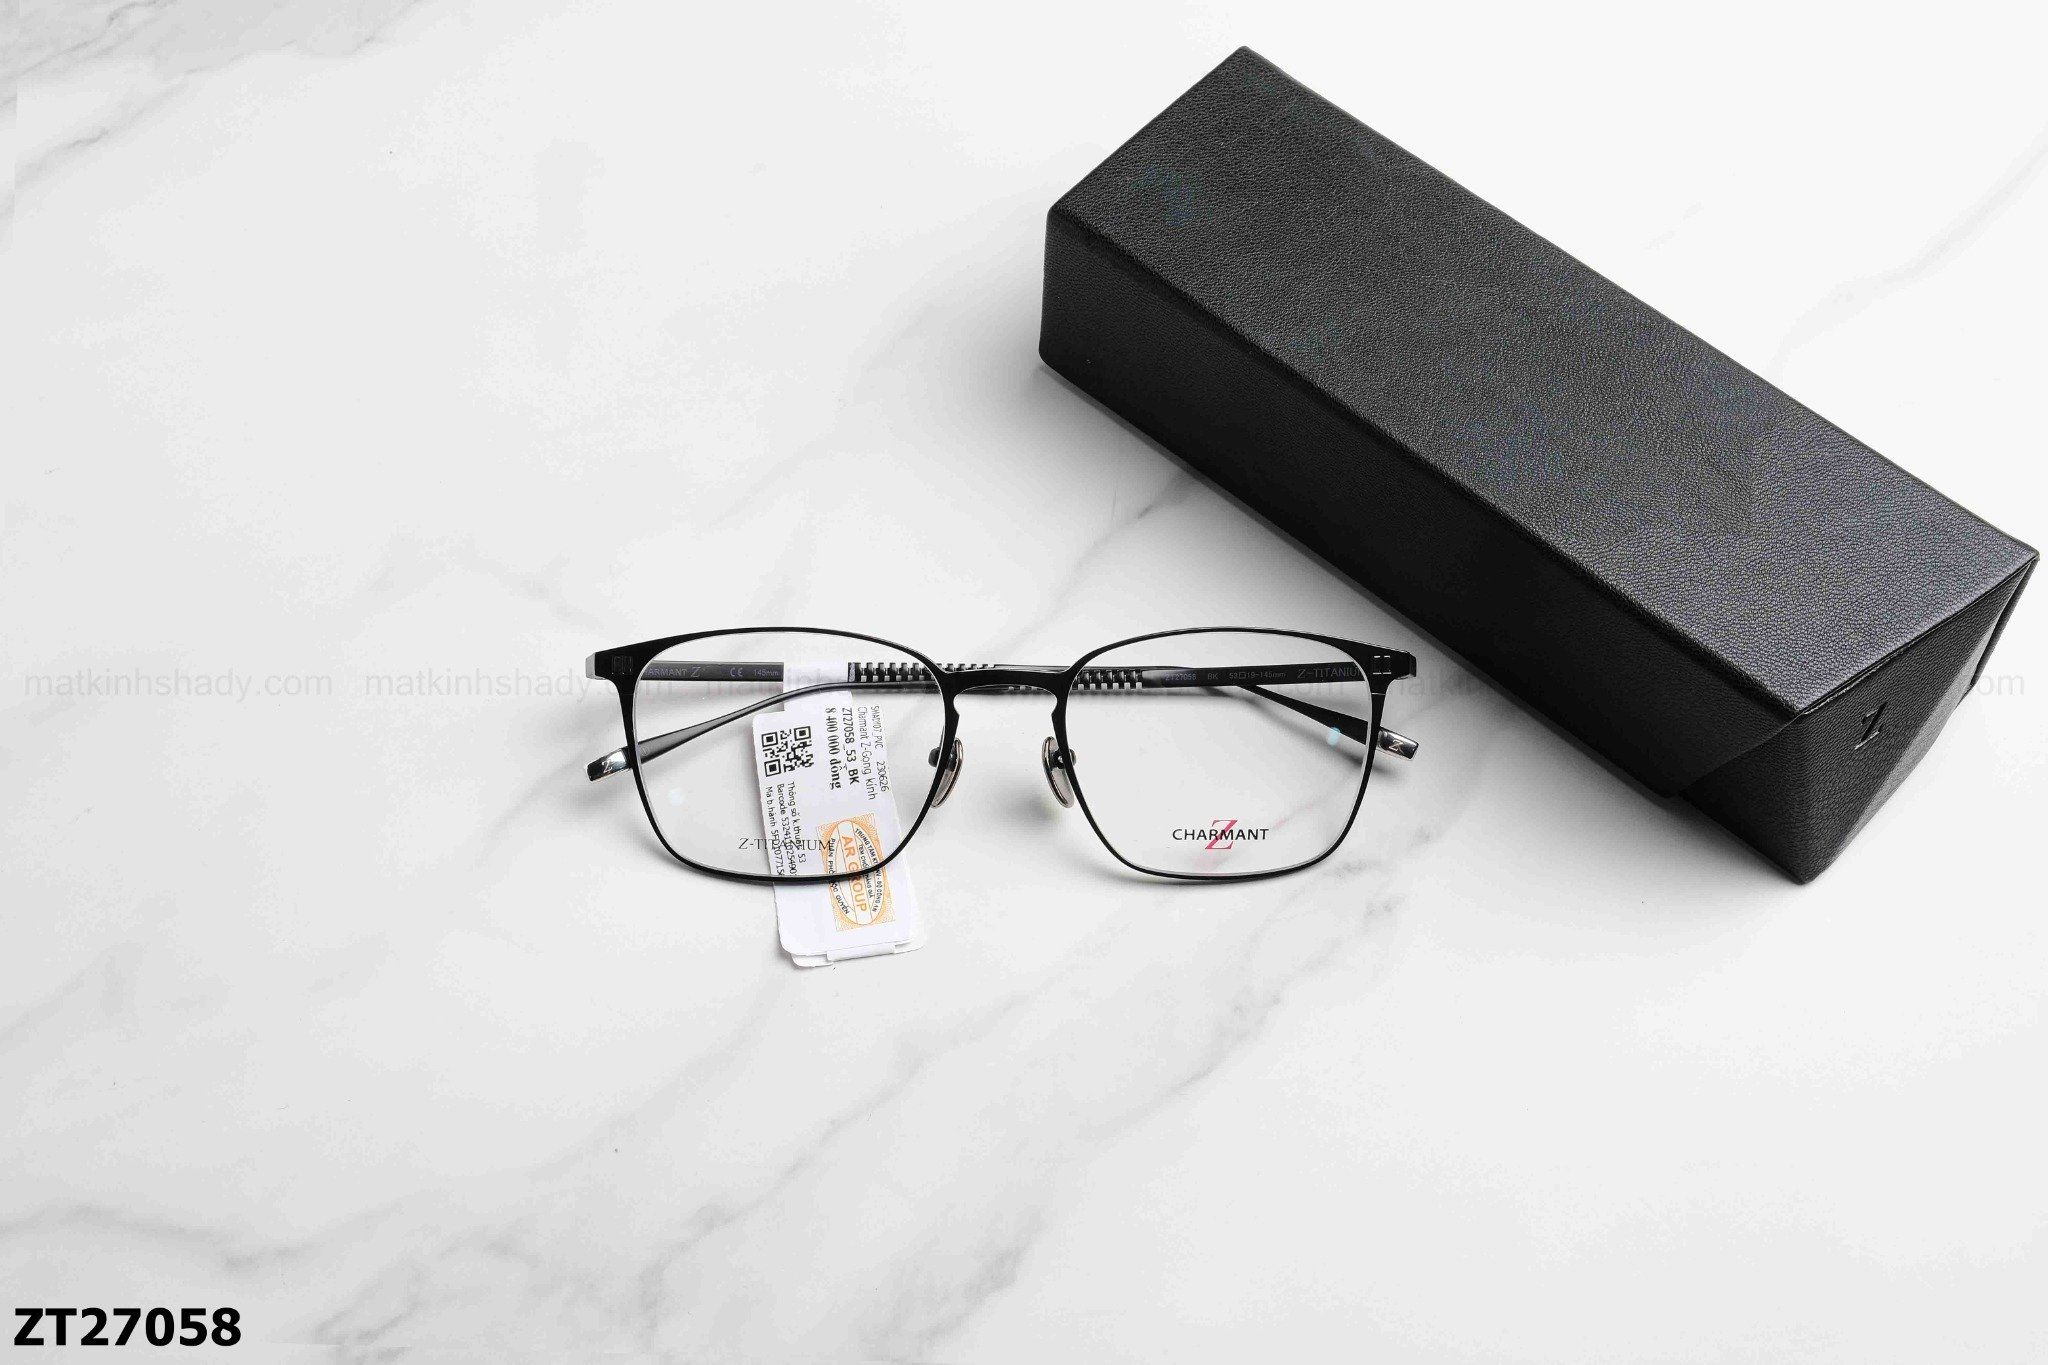  Charmant Z Eyewear - Glasses - ZT27058 